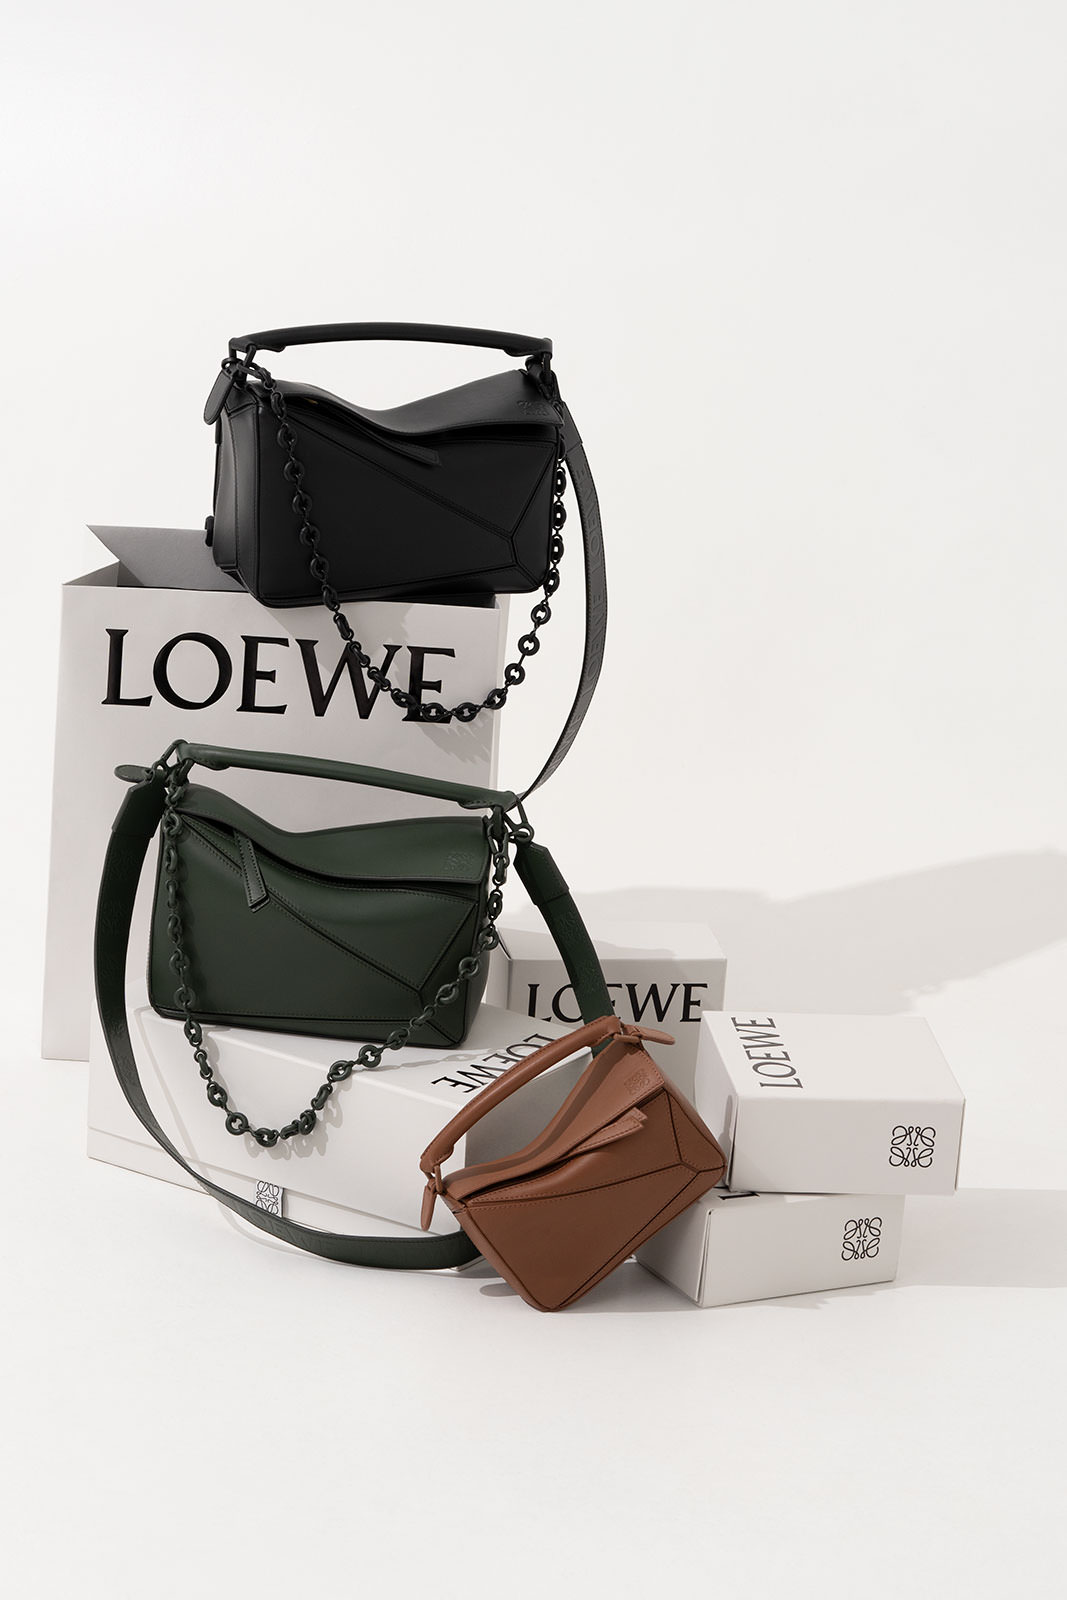 Wish I had bought this puzzle bag tbh #loewe #loewepuzzle #puzzlebag #, Loewe  Bag